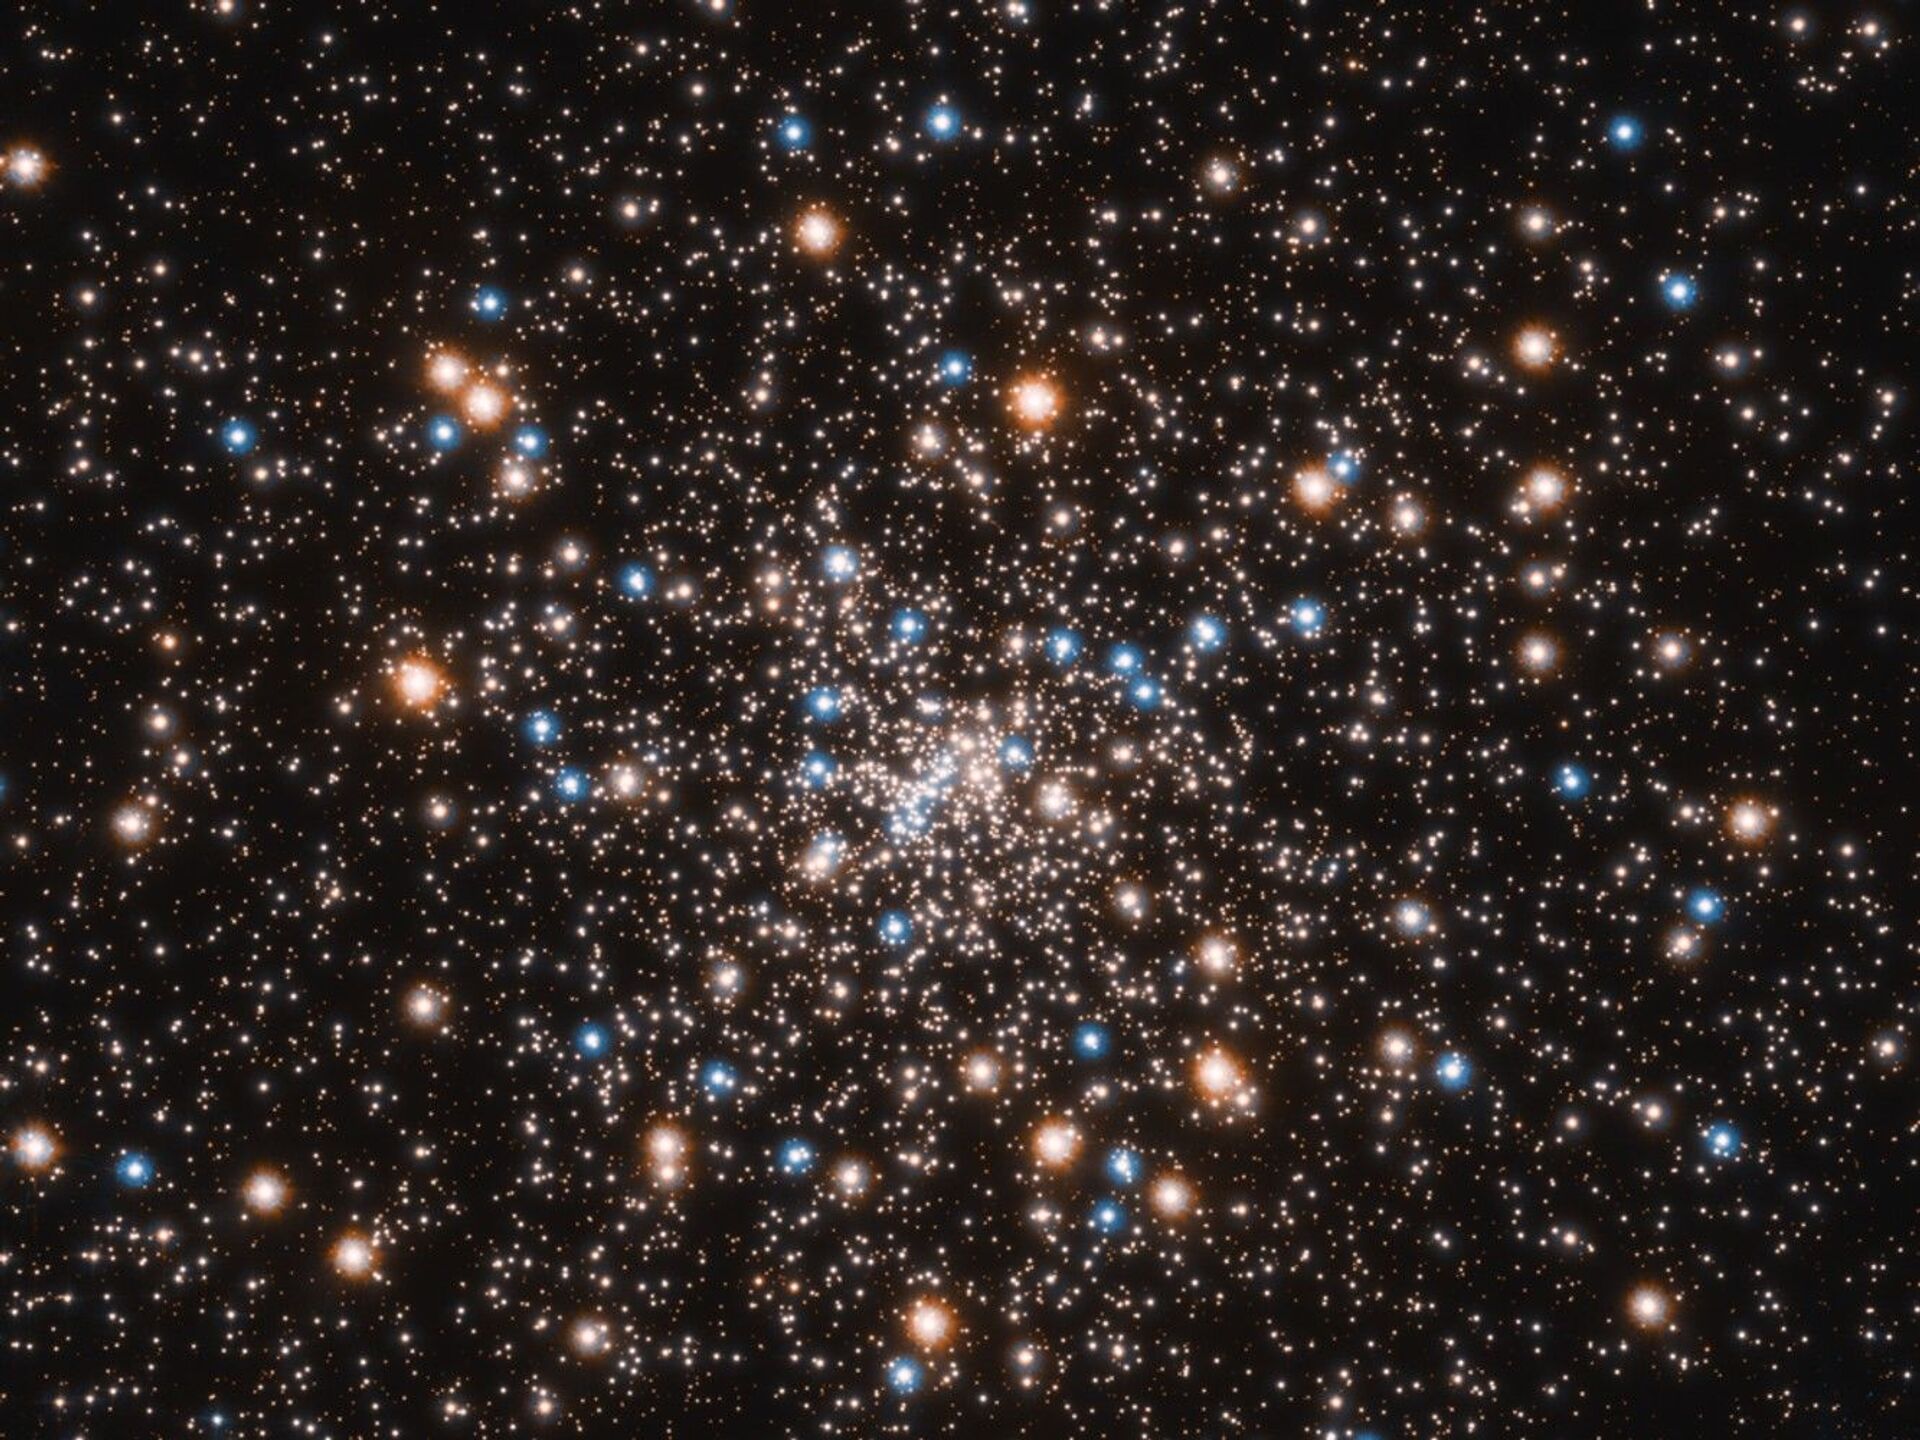 Hubble Telescope Helps Unearth Bevy of Small Black Holes Inside Globular Cluster - Sputnik International, 1920, 12.02.2021